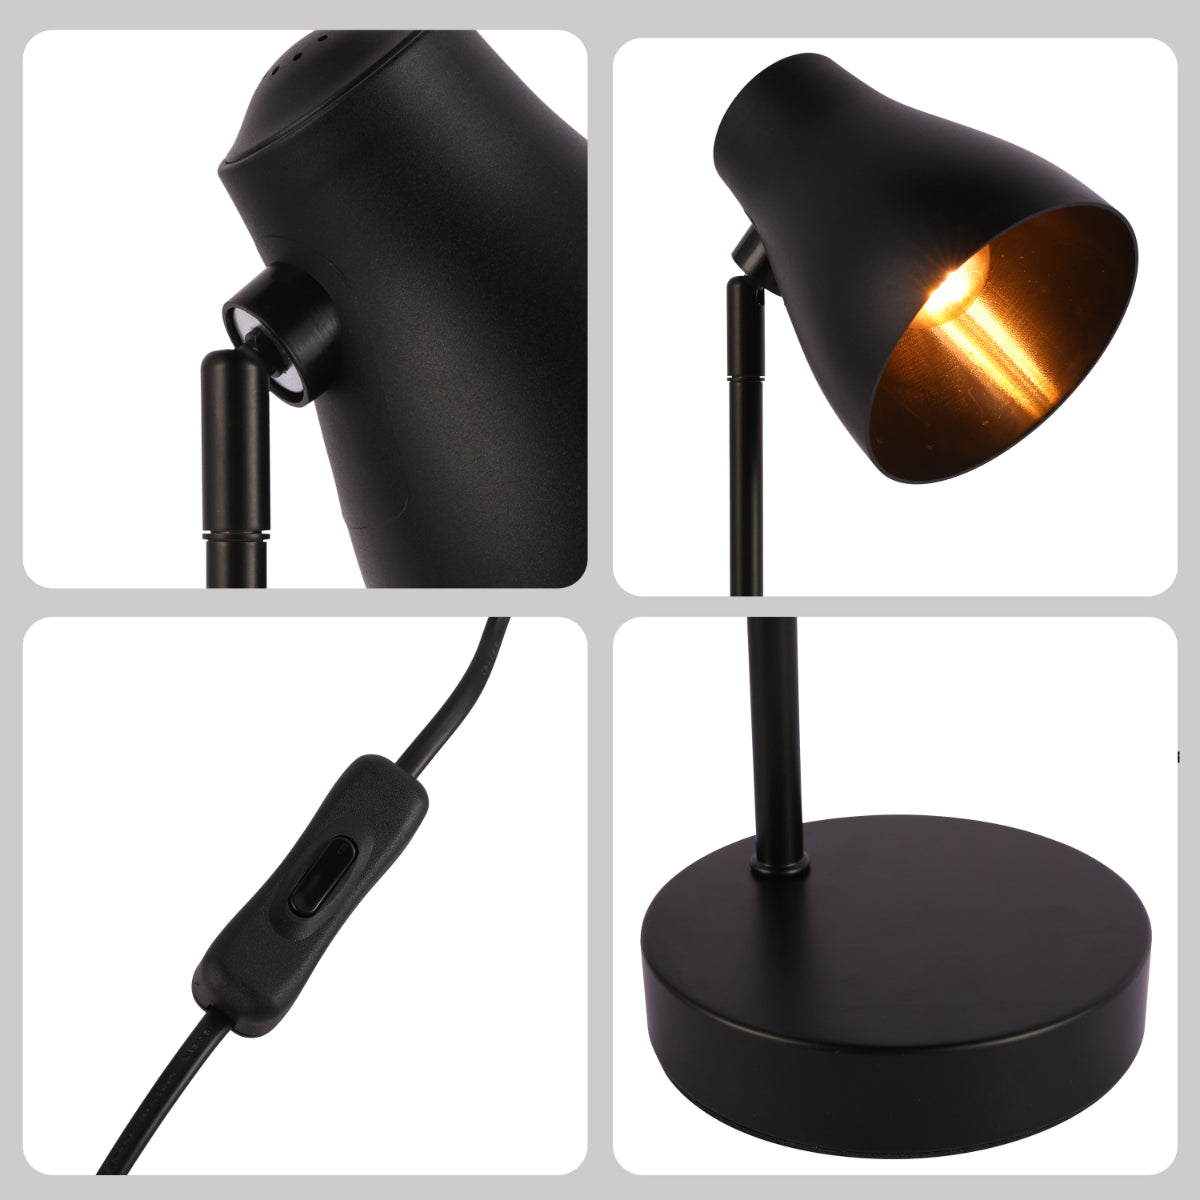 Lighting properties of Elegant Rotatable Desk Lamp in Assorted Colors 130-03650